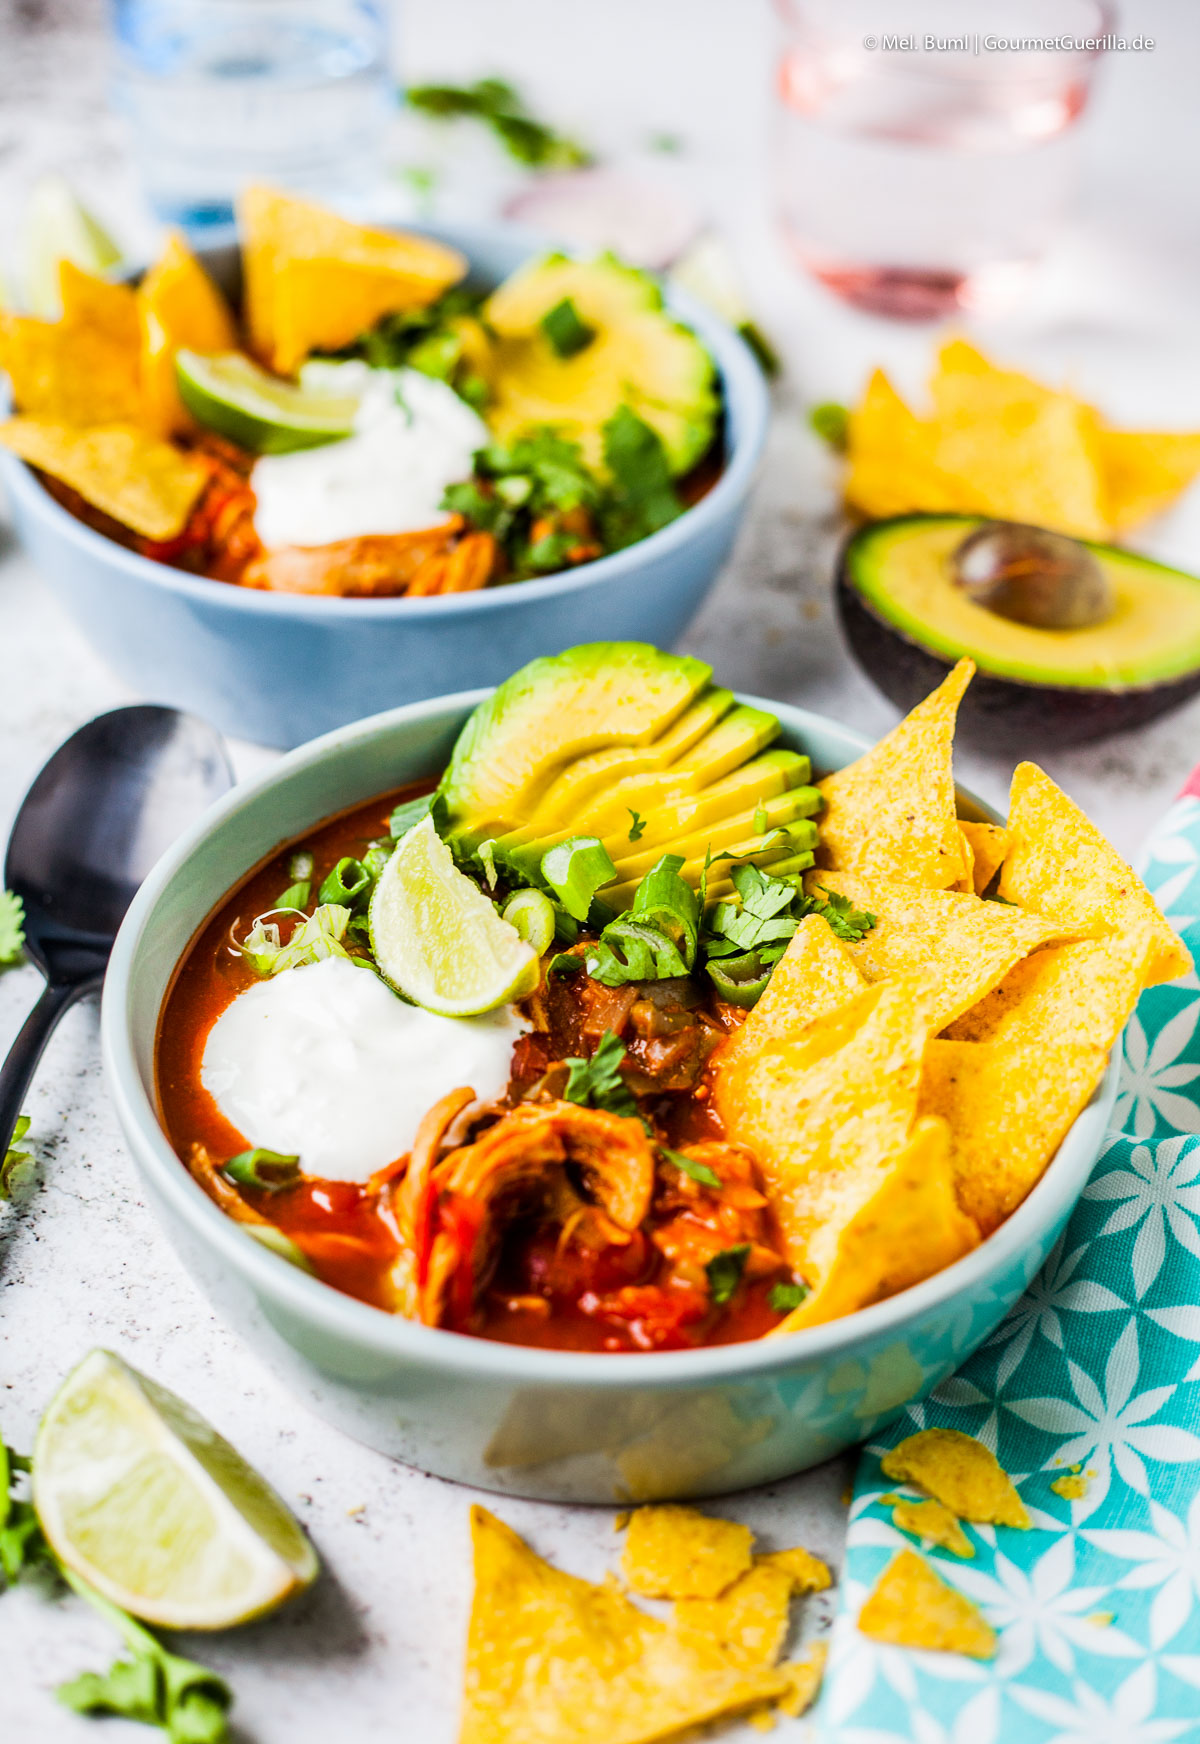 Mexikanische Tortilla-Suppe mit Avocado und Chipotle | GourmetGuerilla.de